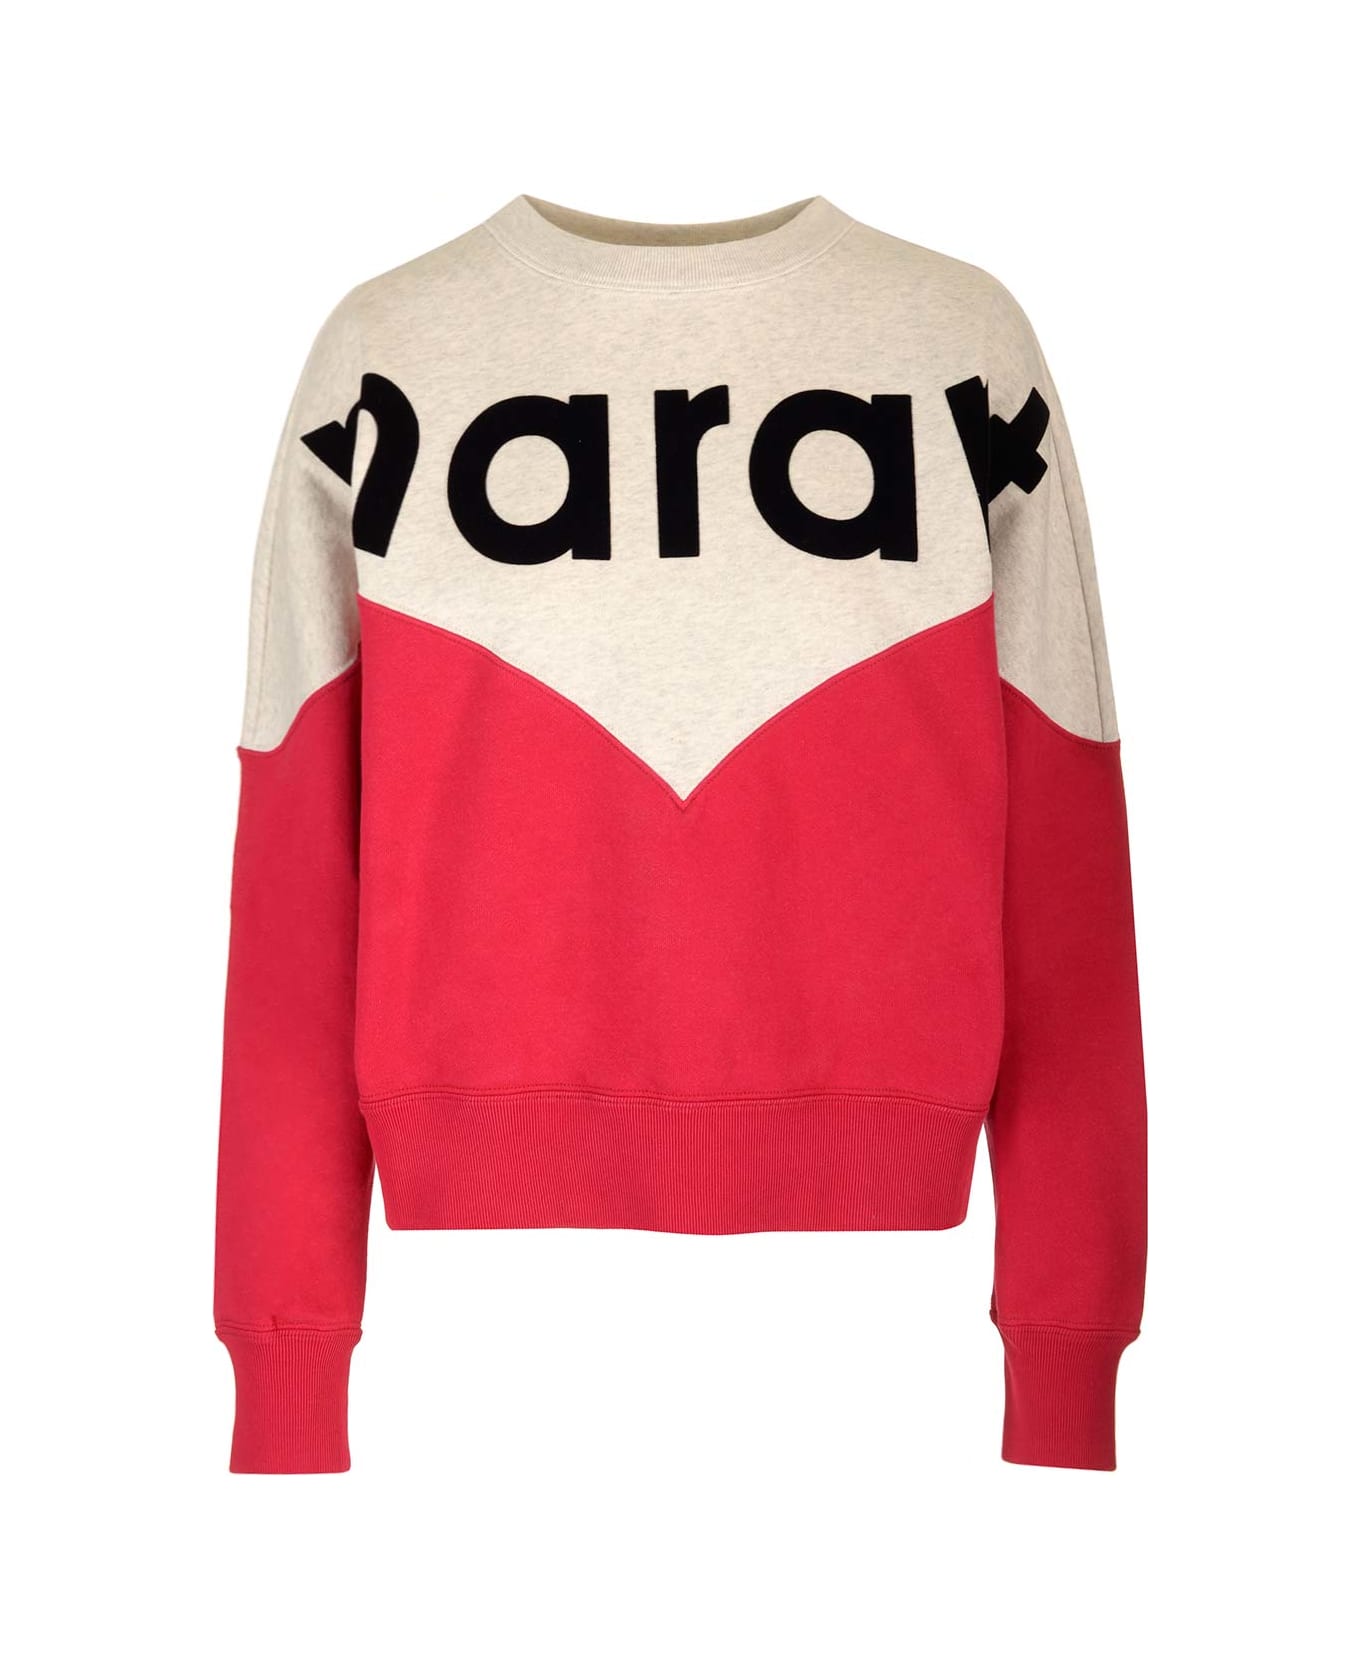 Marant Étoile 'houston' Sweatshirt - RED/NEUTRALS